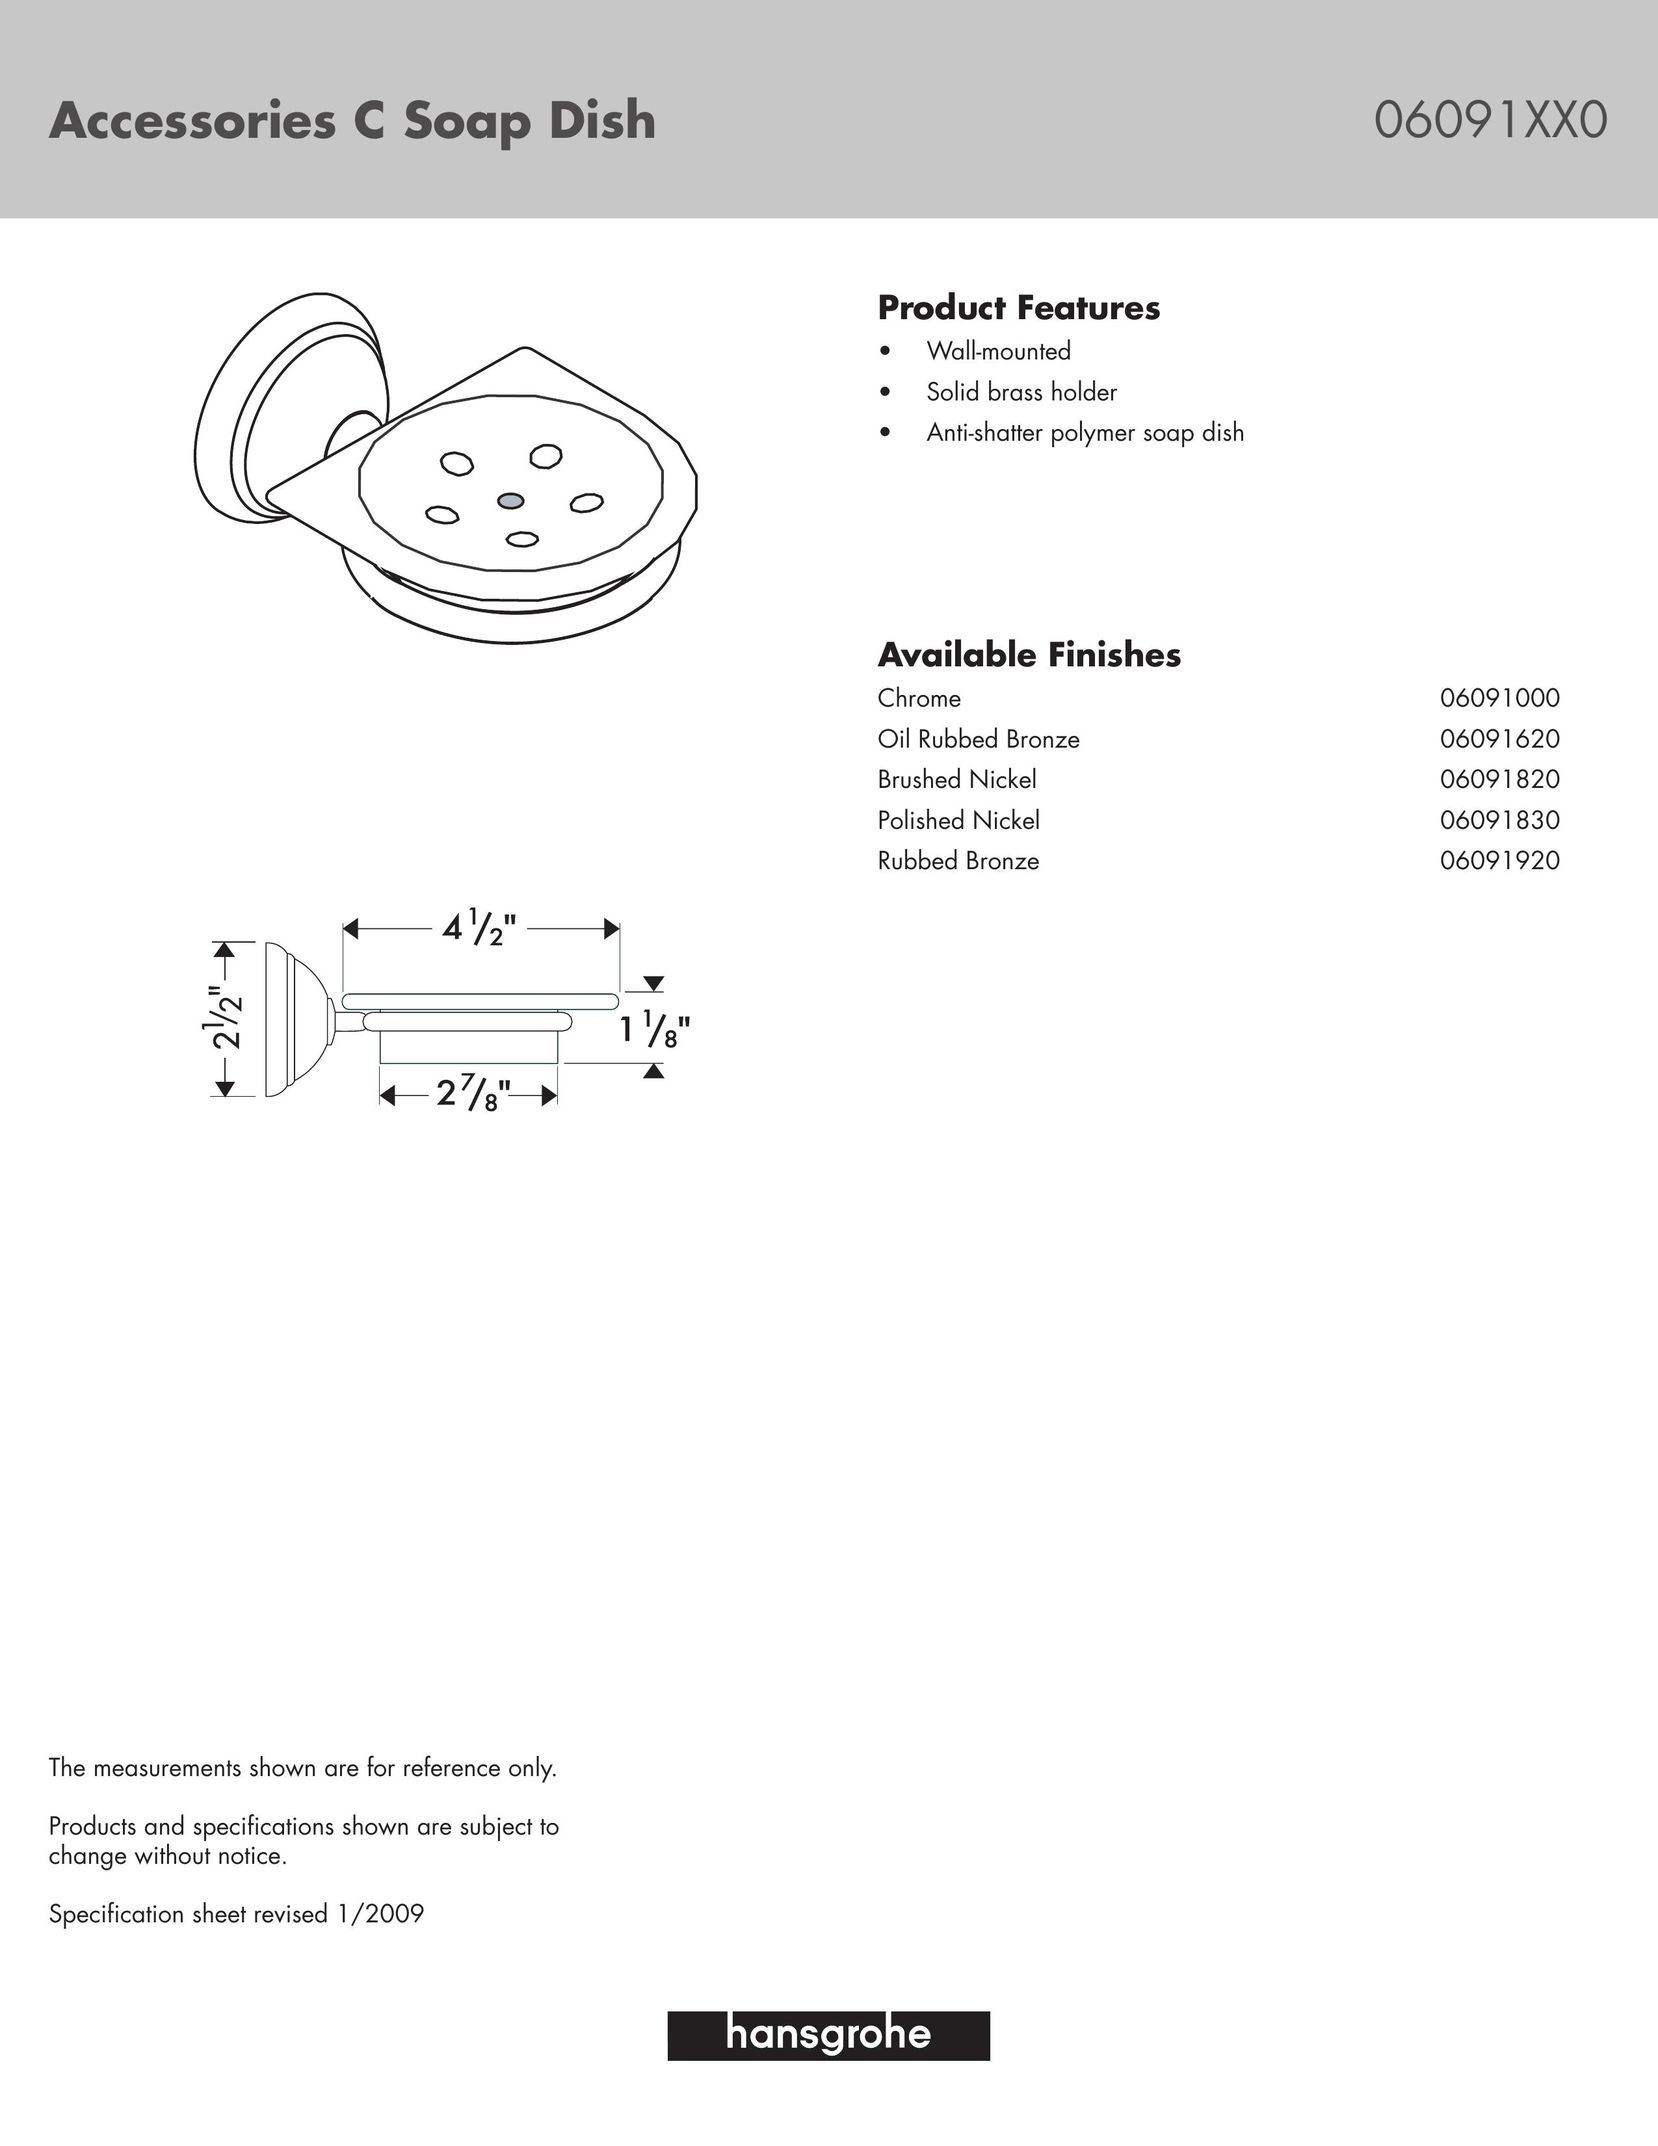 Hans Grohe 06091820 Plumbing Product User Manual